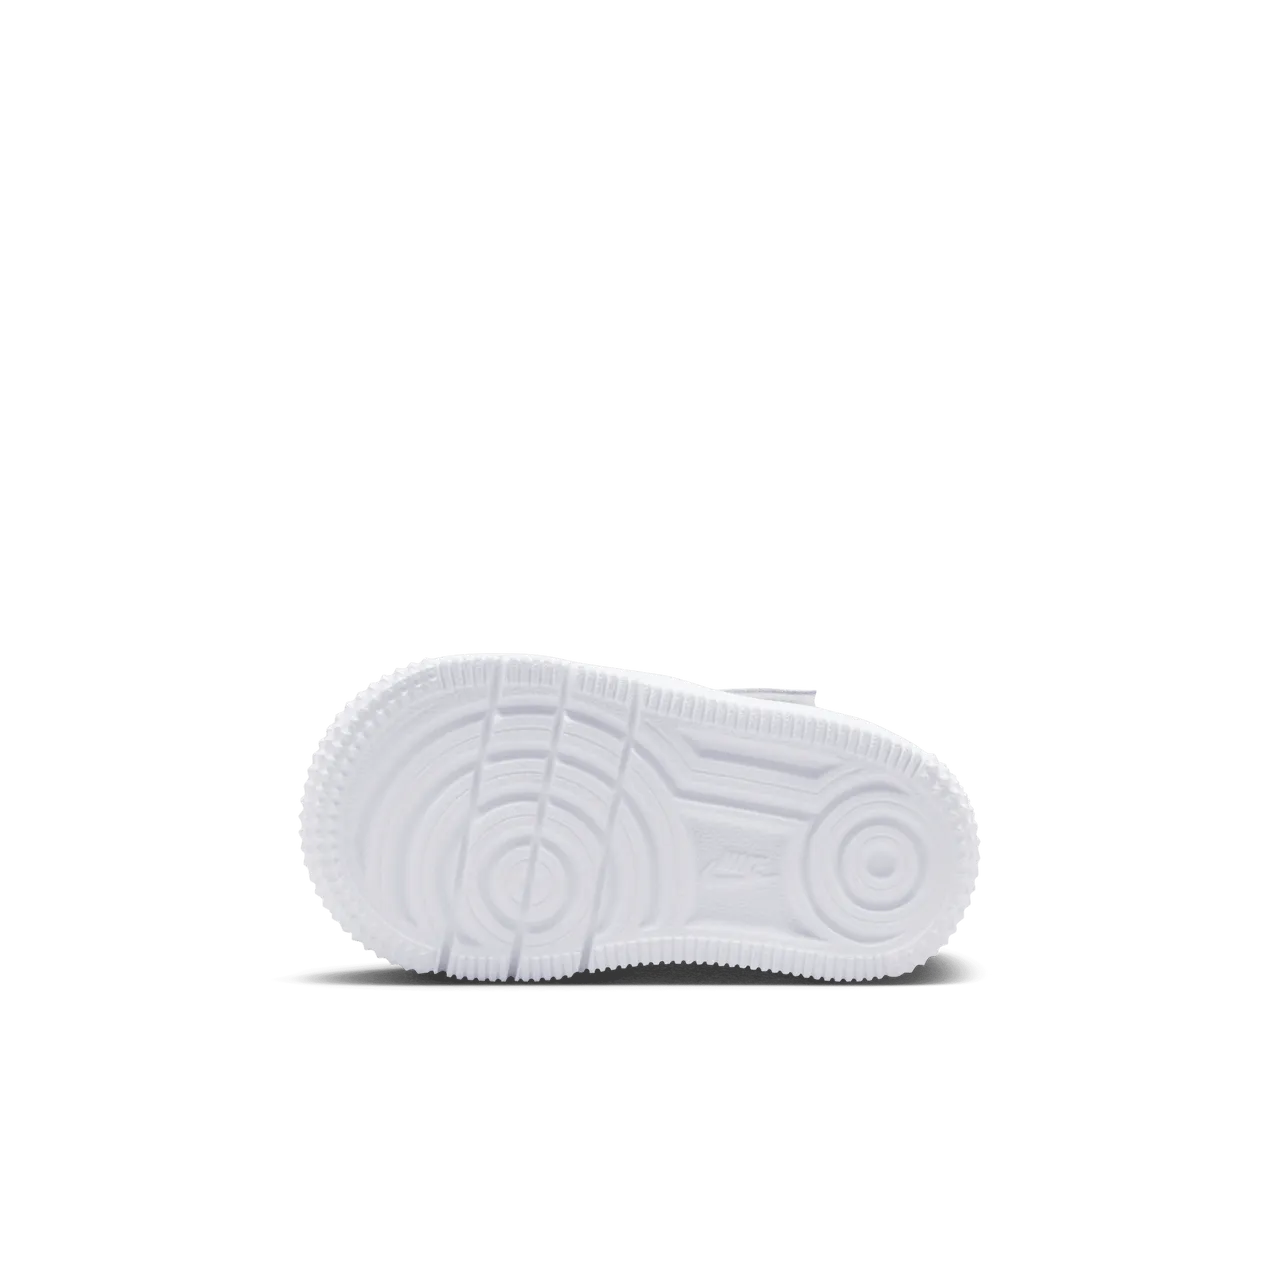 Nike Force 1 Low EasyOn Baby/Toddler Shoes - White